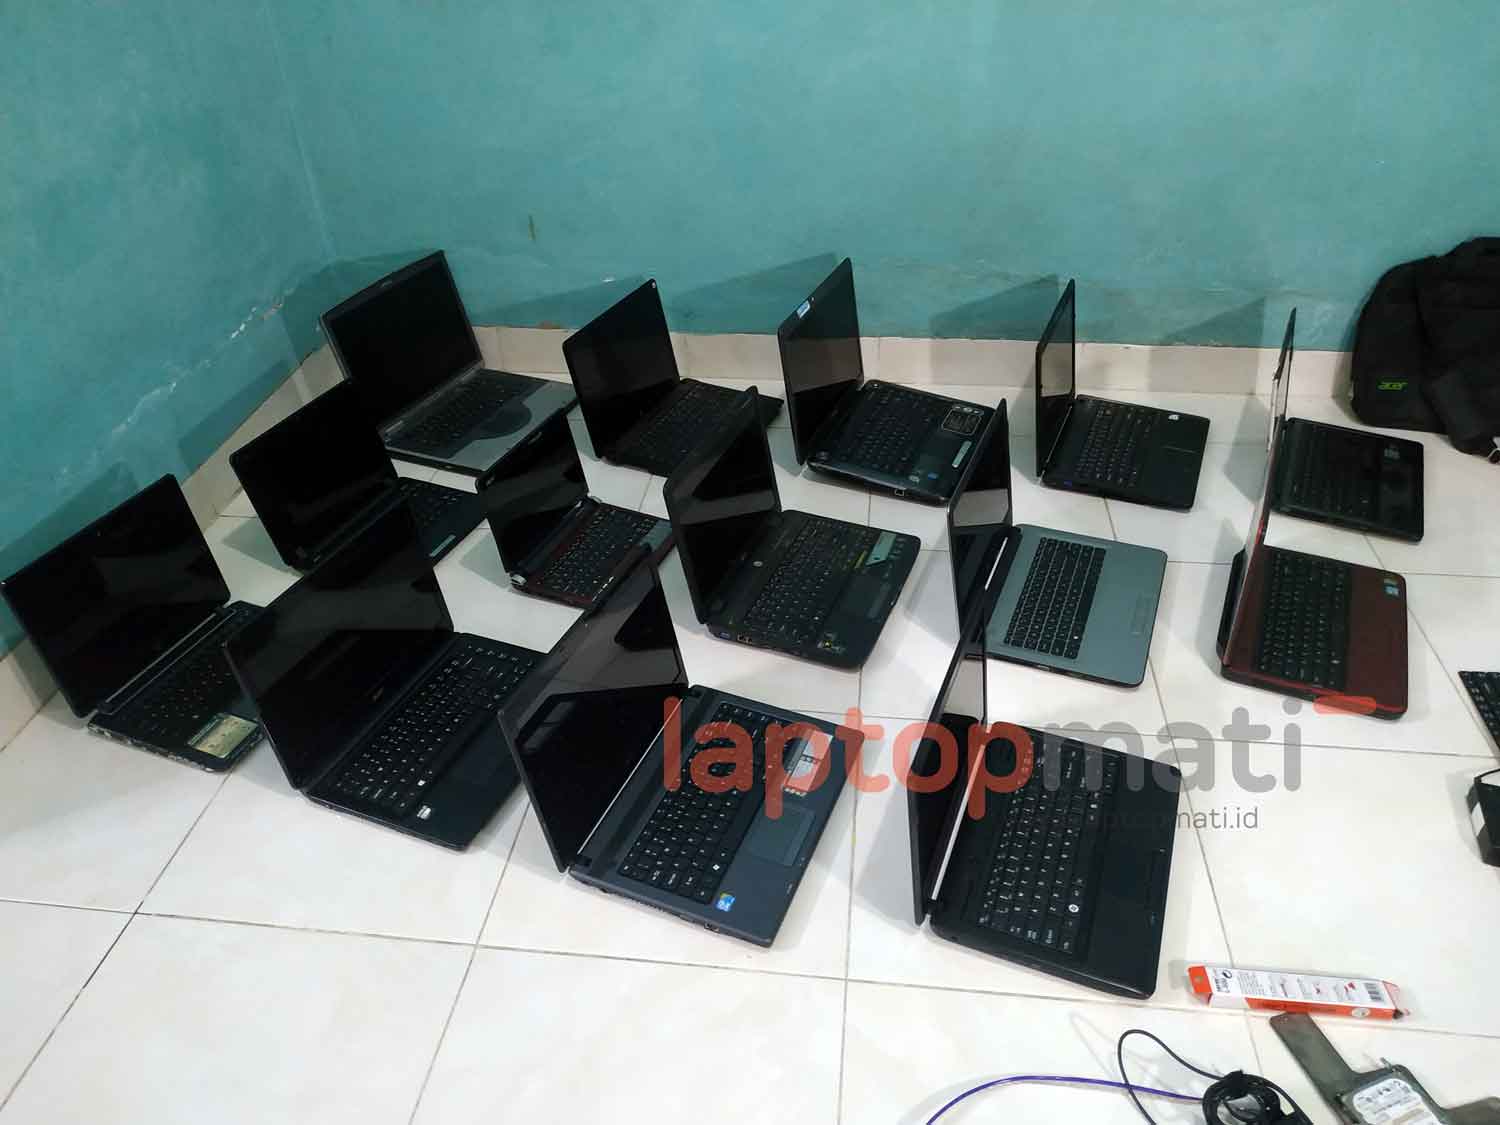 Tukar Tambah Laptop Denpasar Bali